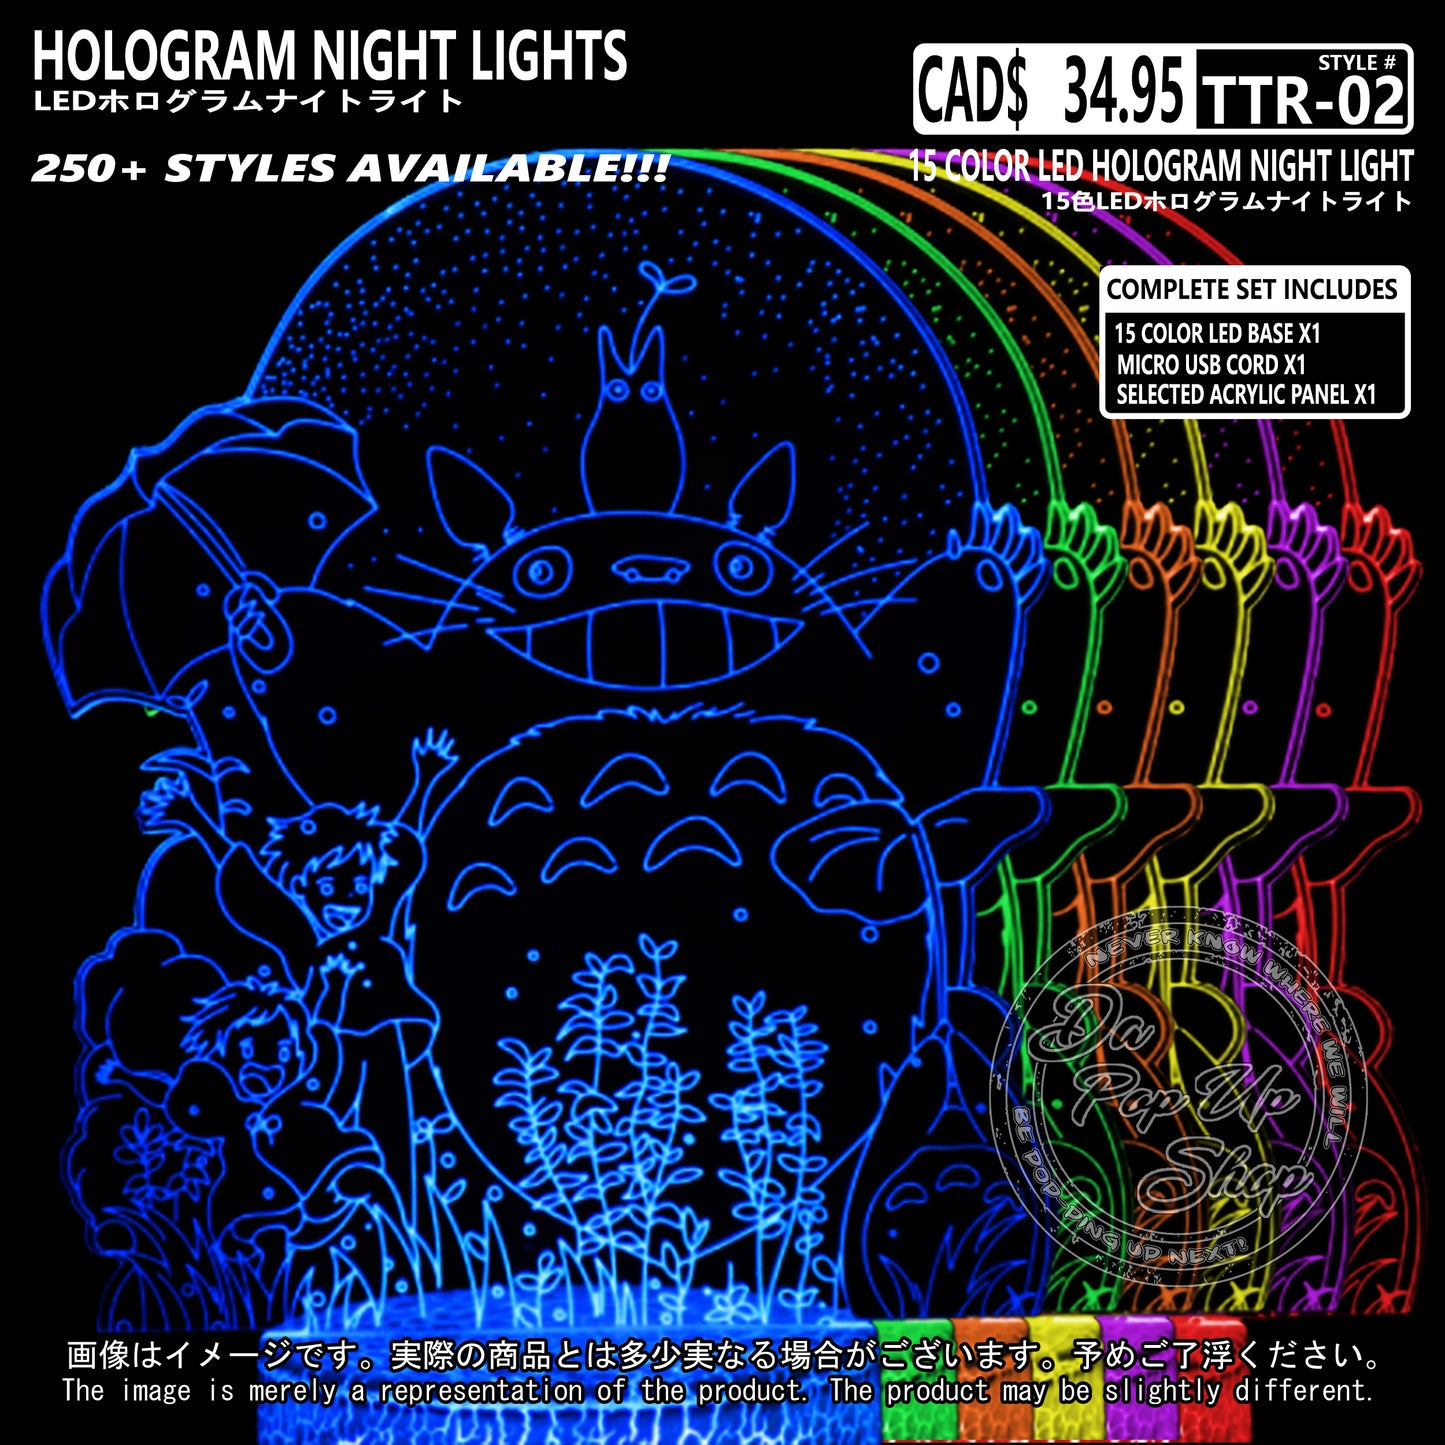 (TTR-02) MY NEIGHBOR TOTORO Studio Ghibli Hologram LED Night Light